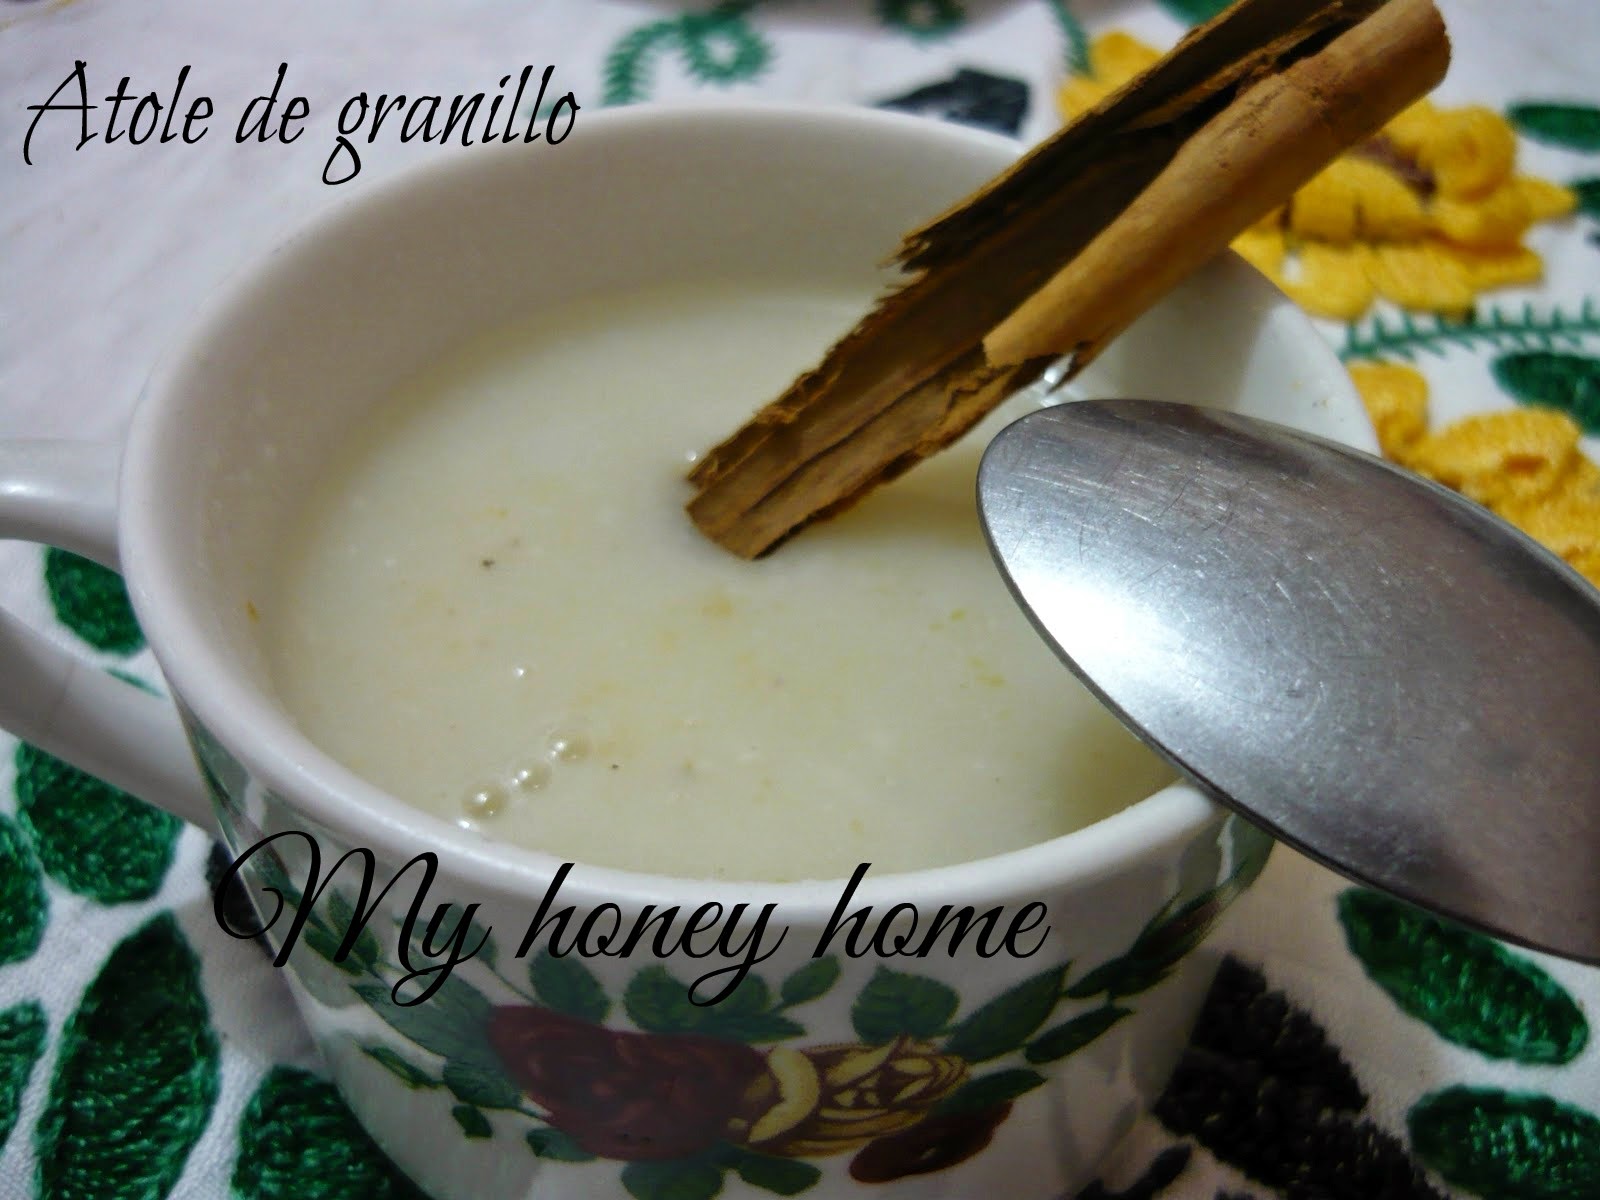 Honey home~ : ATOLE DE GRANILLO